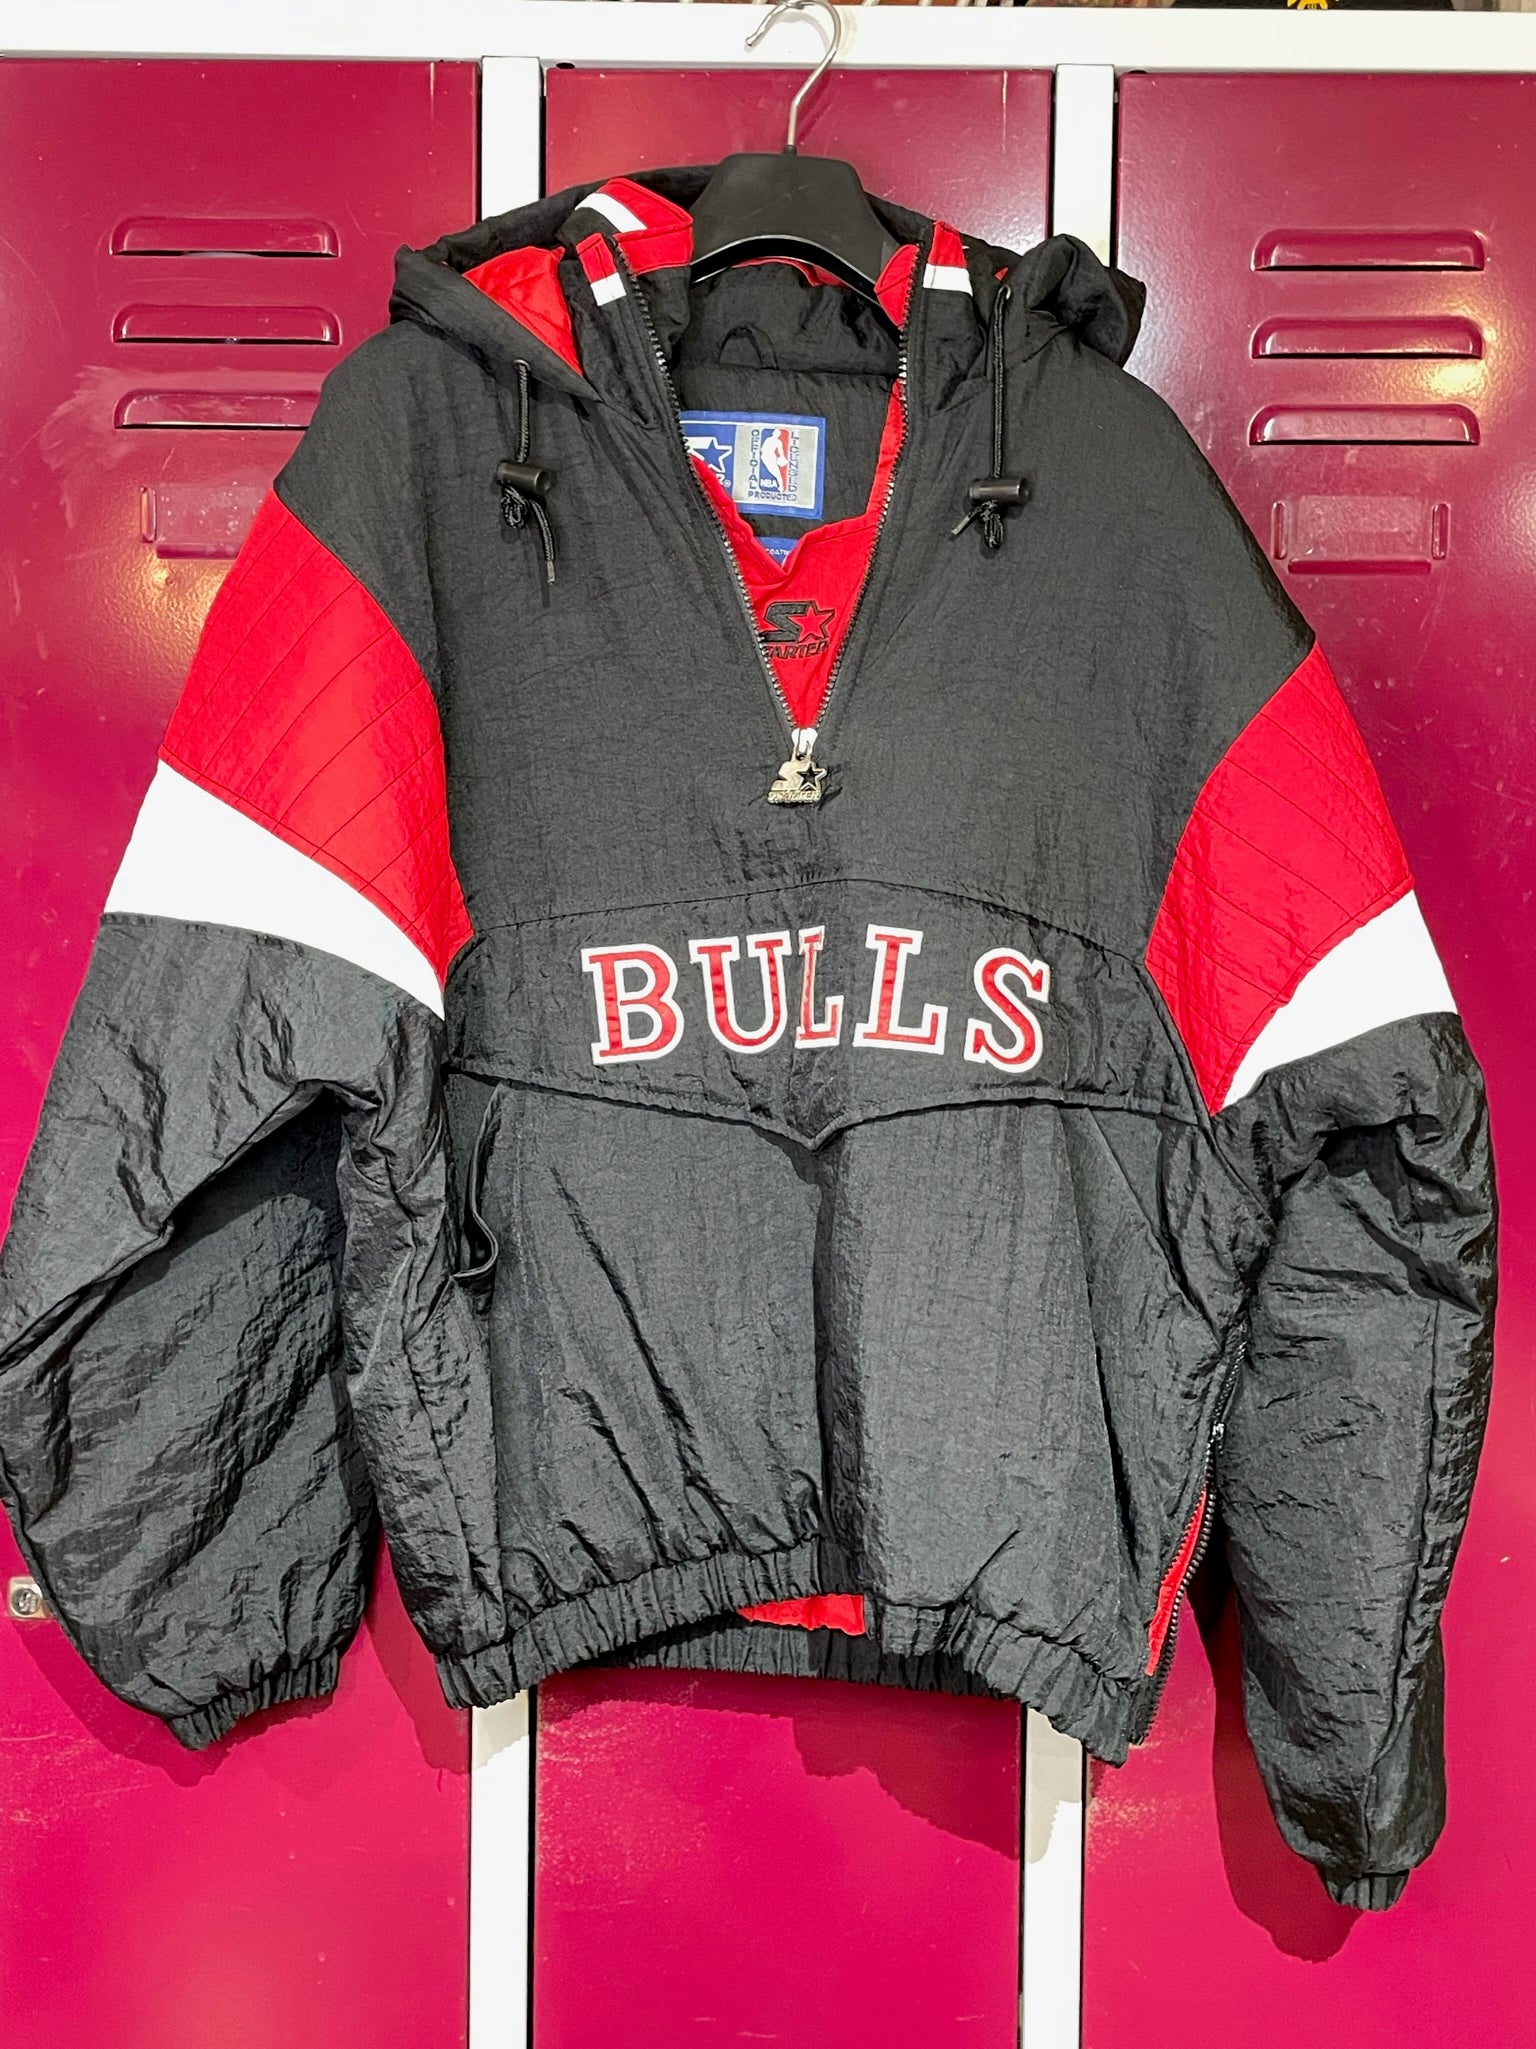 Vintage Chicago Bulls Sweatshirt Crewneck Size XL Red 90s NBA